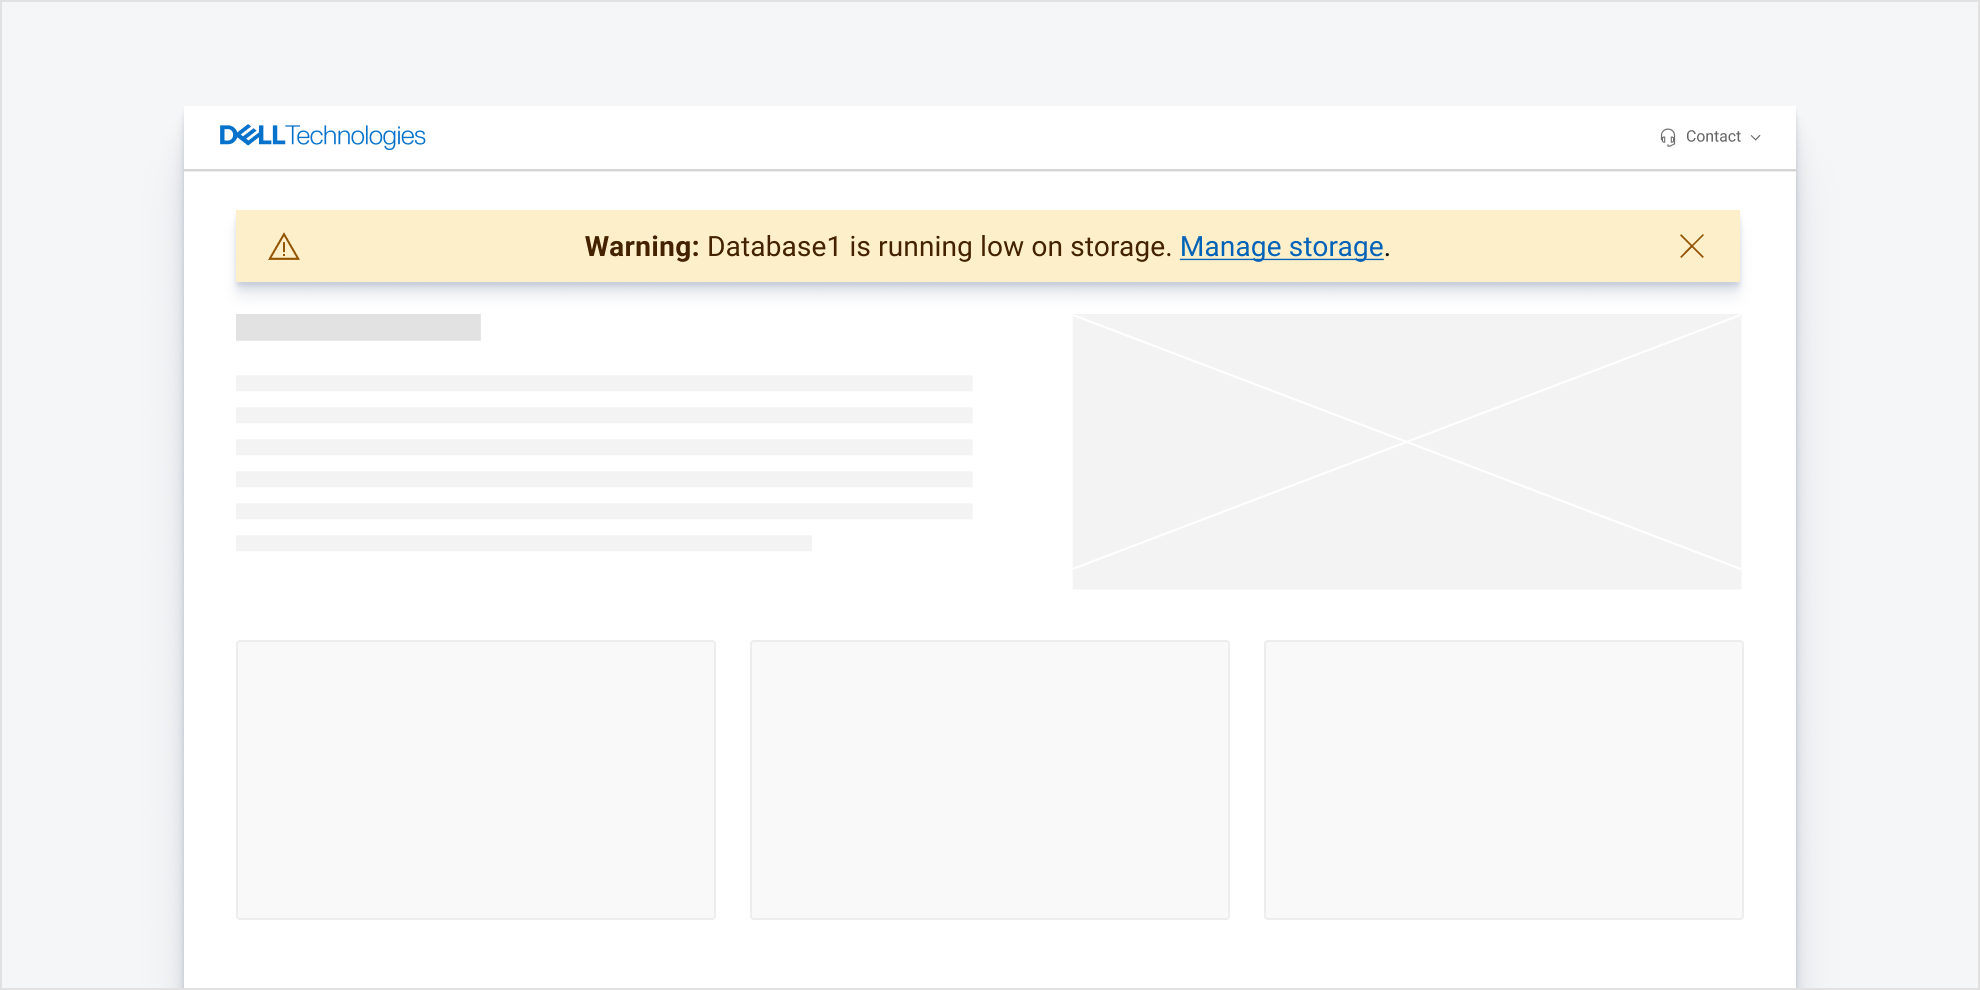 Global message bar warning, “Database 1 is running low on storage.” Link shown: “Manage storage”.